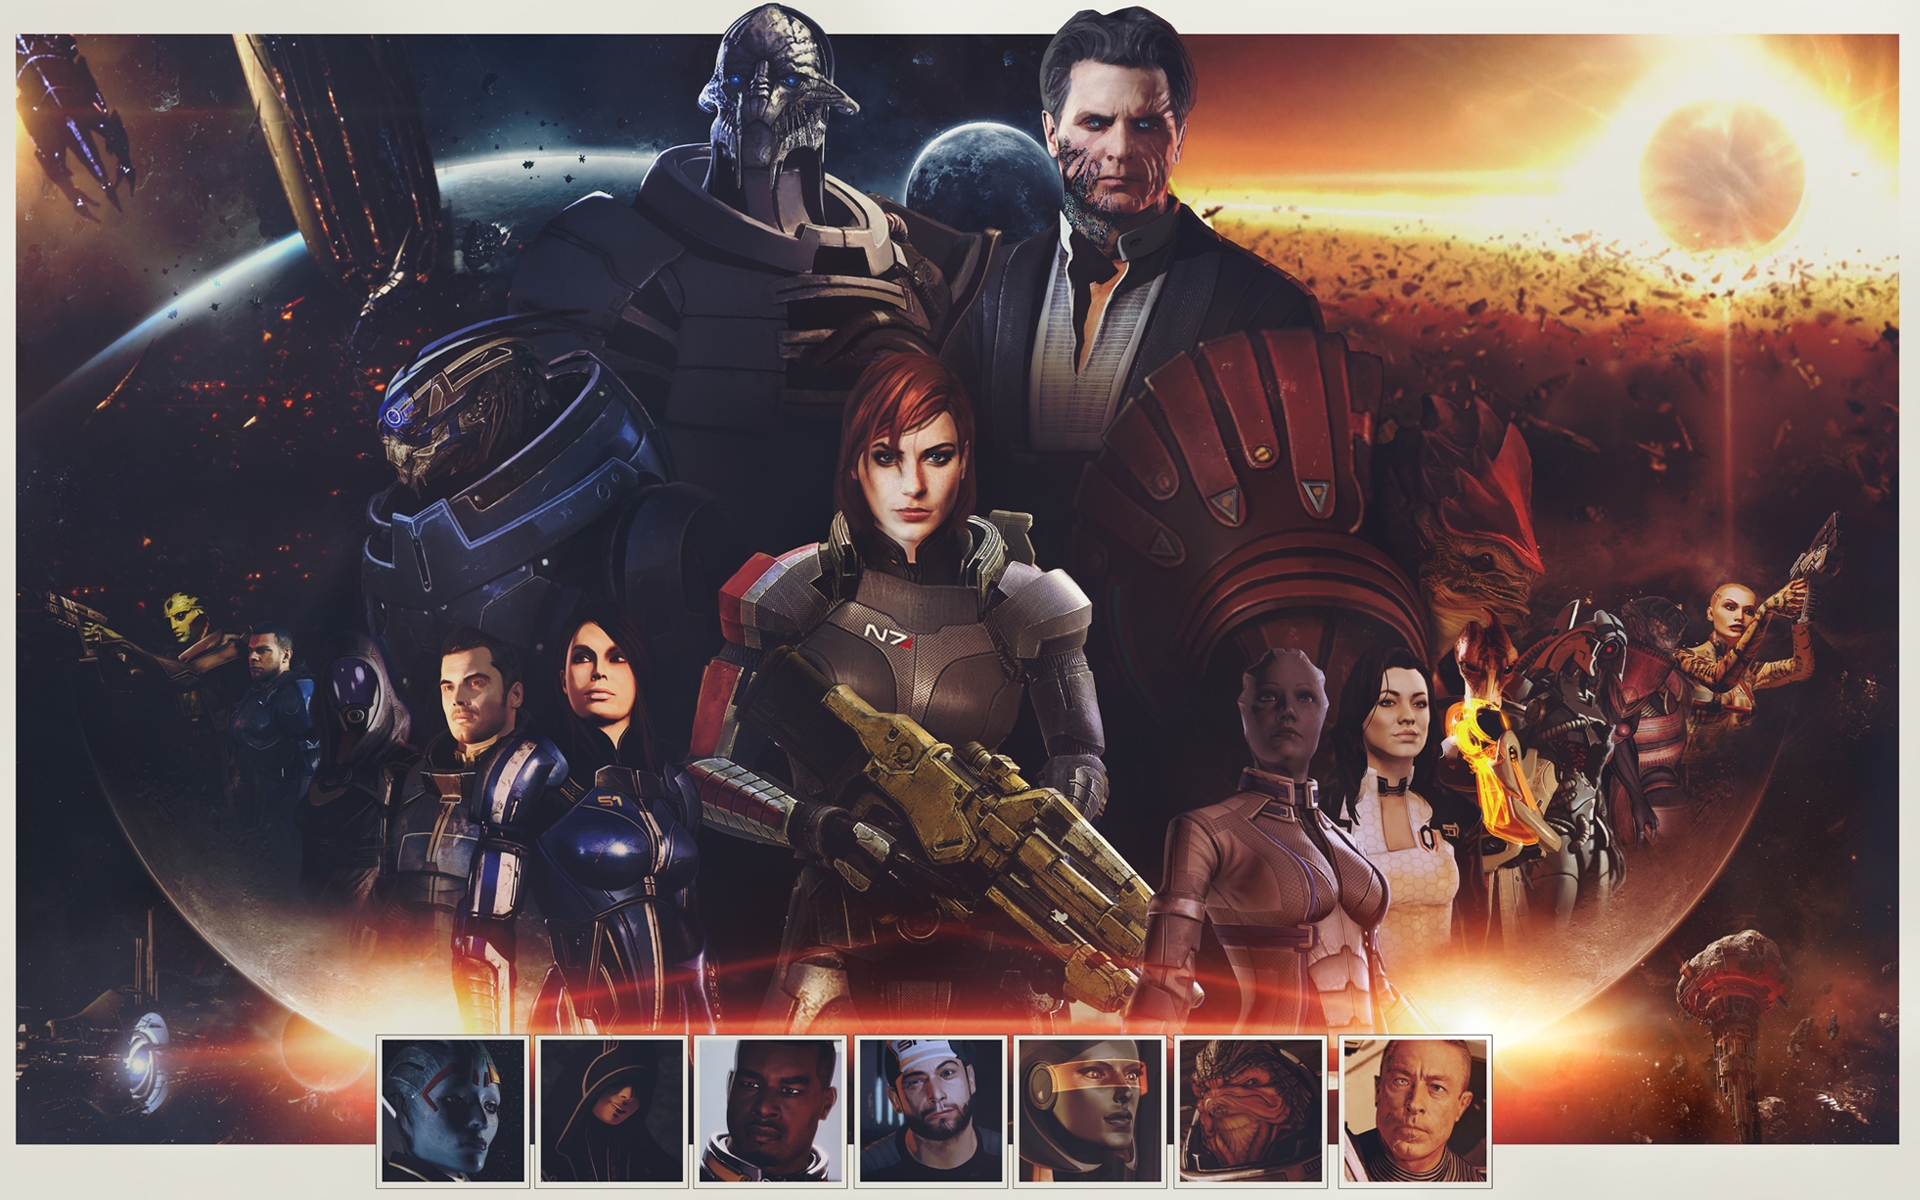 Mass Effect Zaeed Massani for 1920 x 1200 widescreen resolution